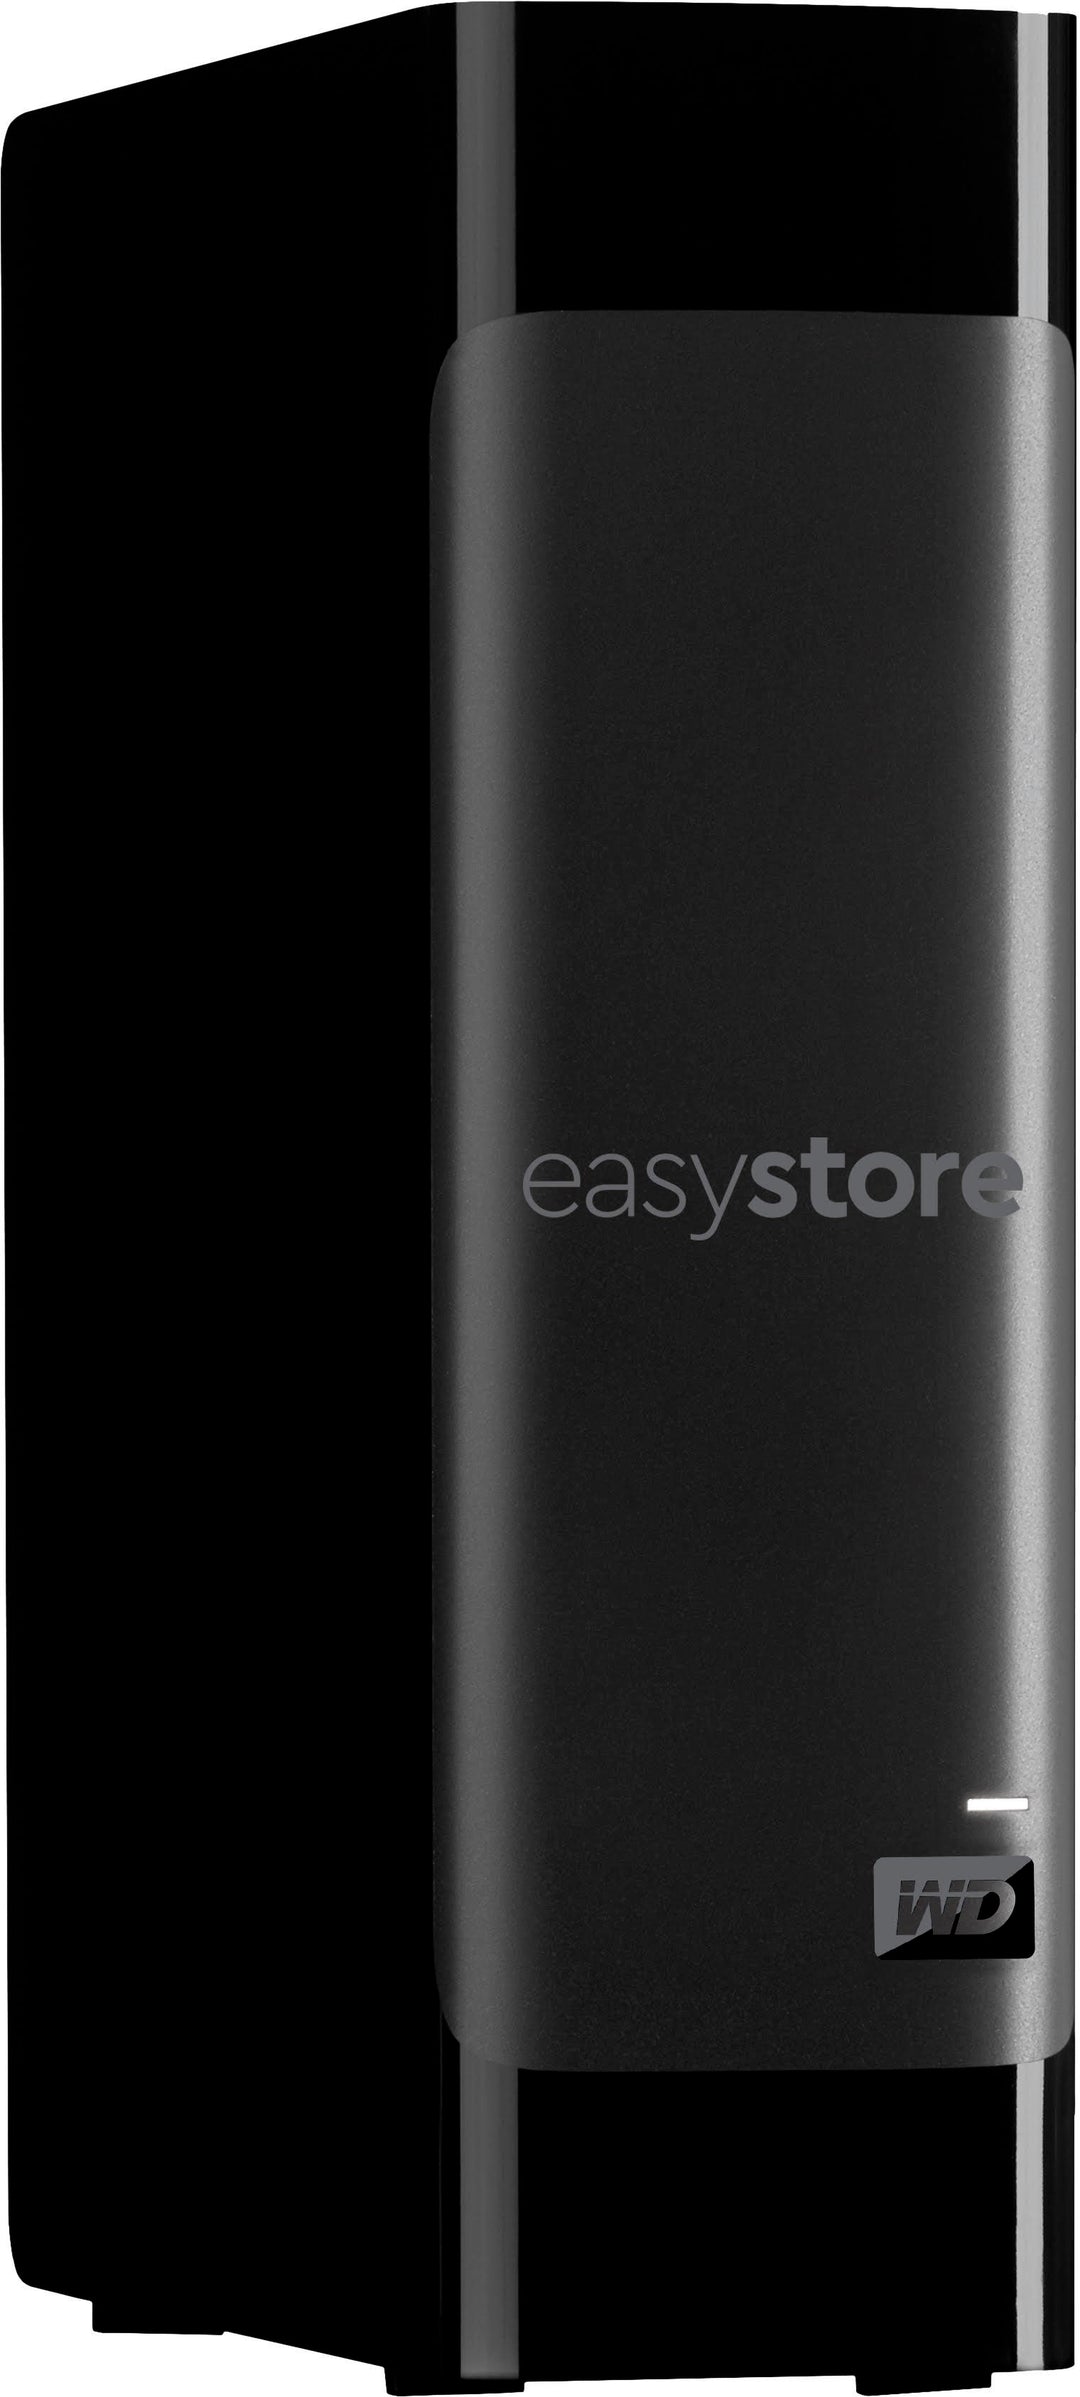 WD - easystore 22TB External USB 3.0 Hard Drive - Black_2